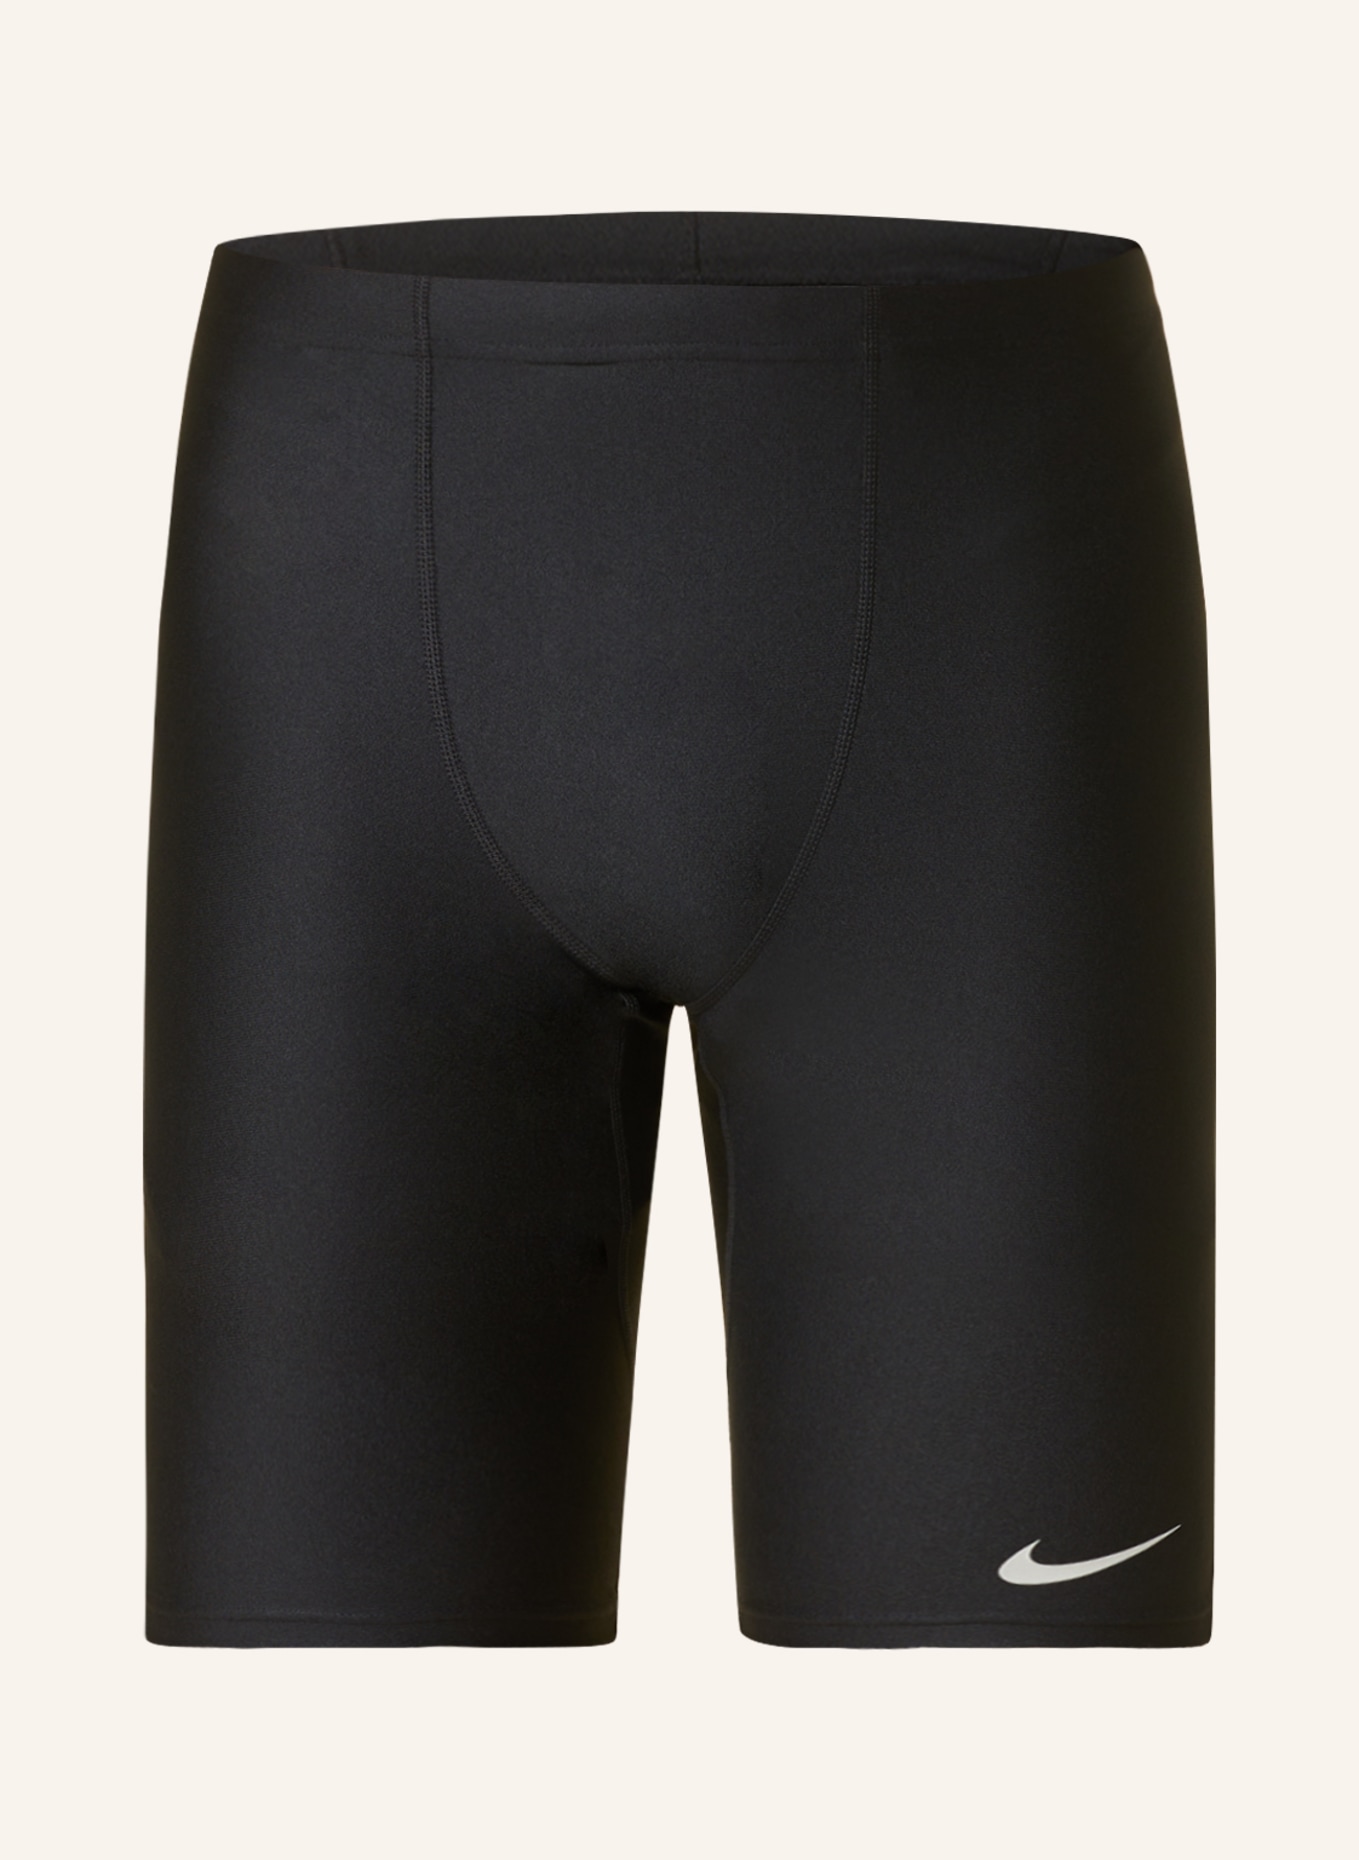 Nike Running shorts DRI-FIT FAST in black